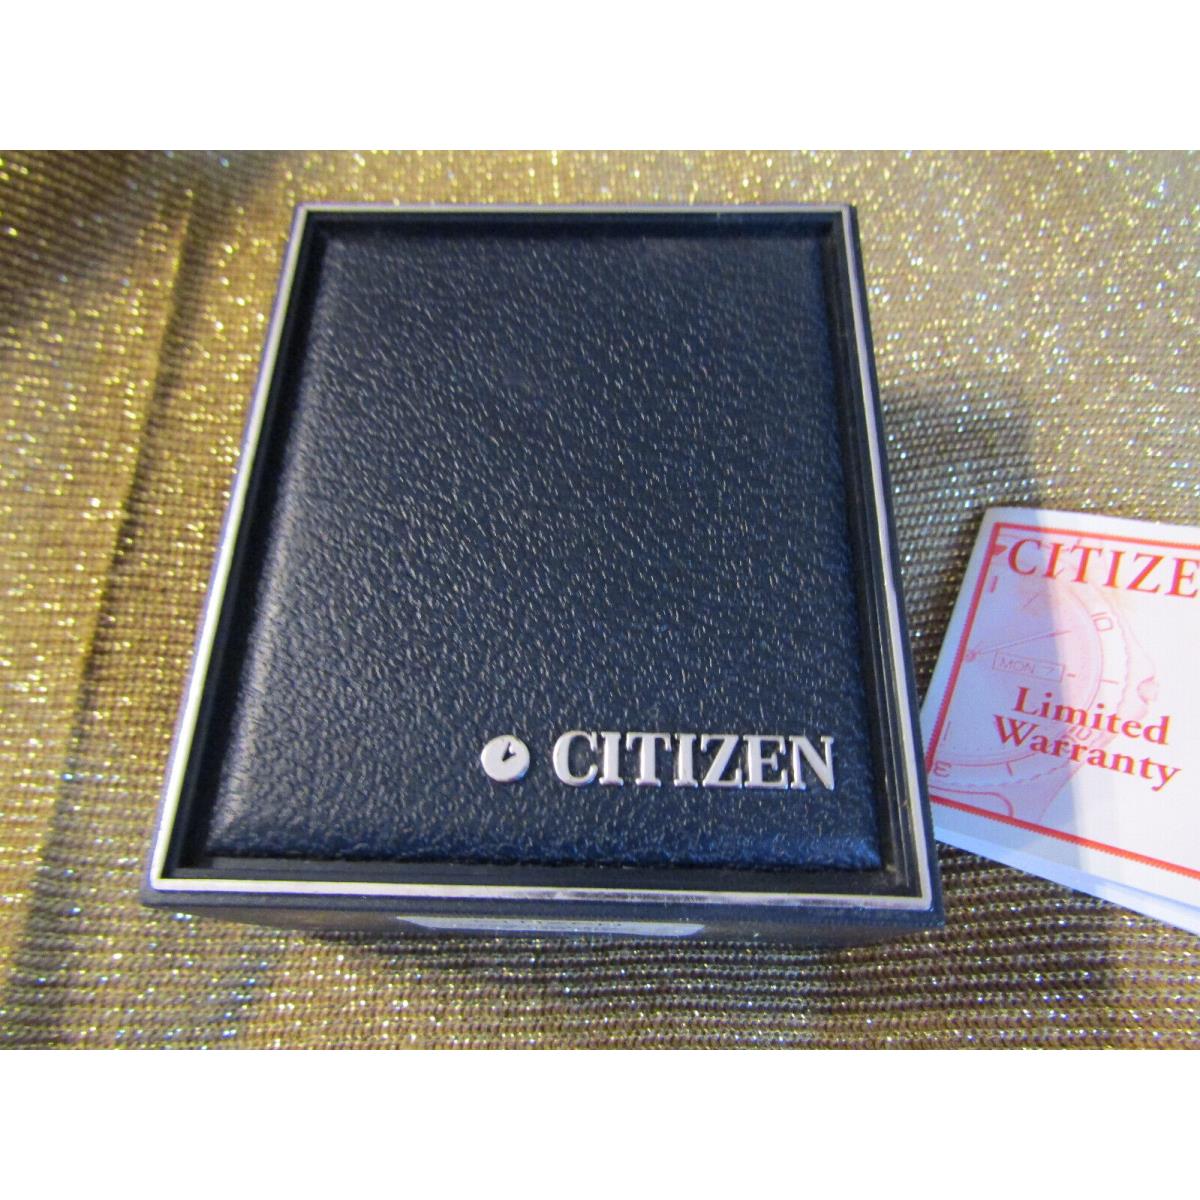 Citizen watch Vintage - Gold Dial, Silver Band, Silver Bezel